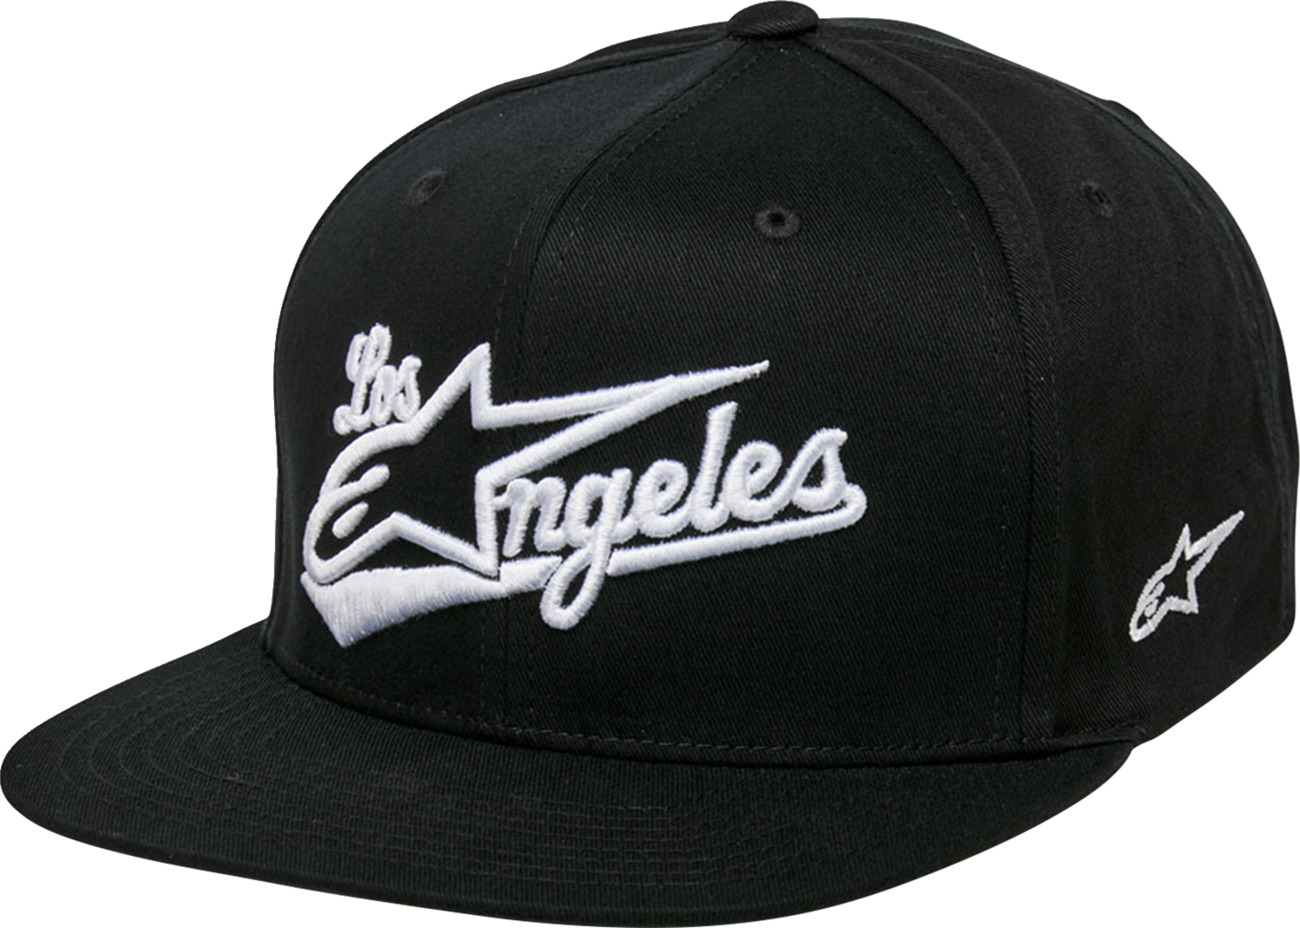 ALPINESTARS Los Angeles Hat - Black/White - One Size 1233815701020OS